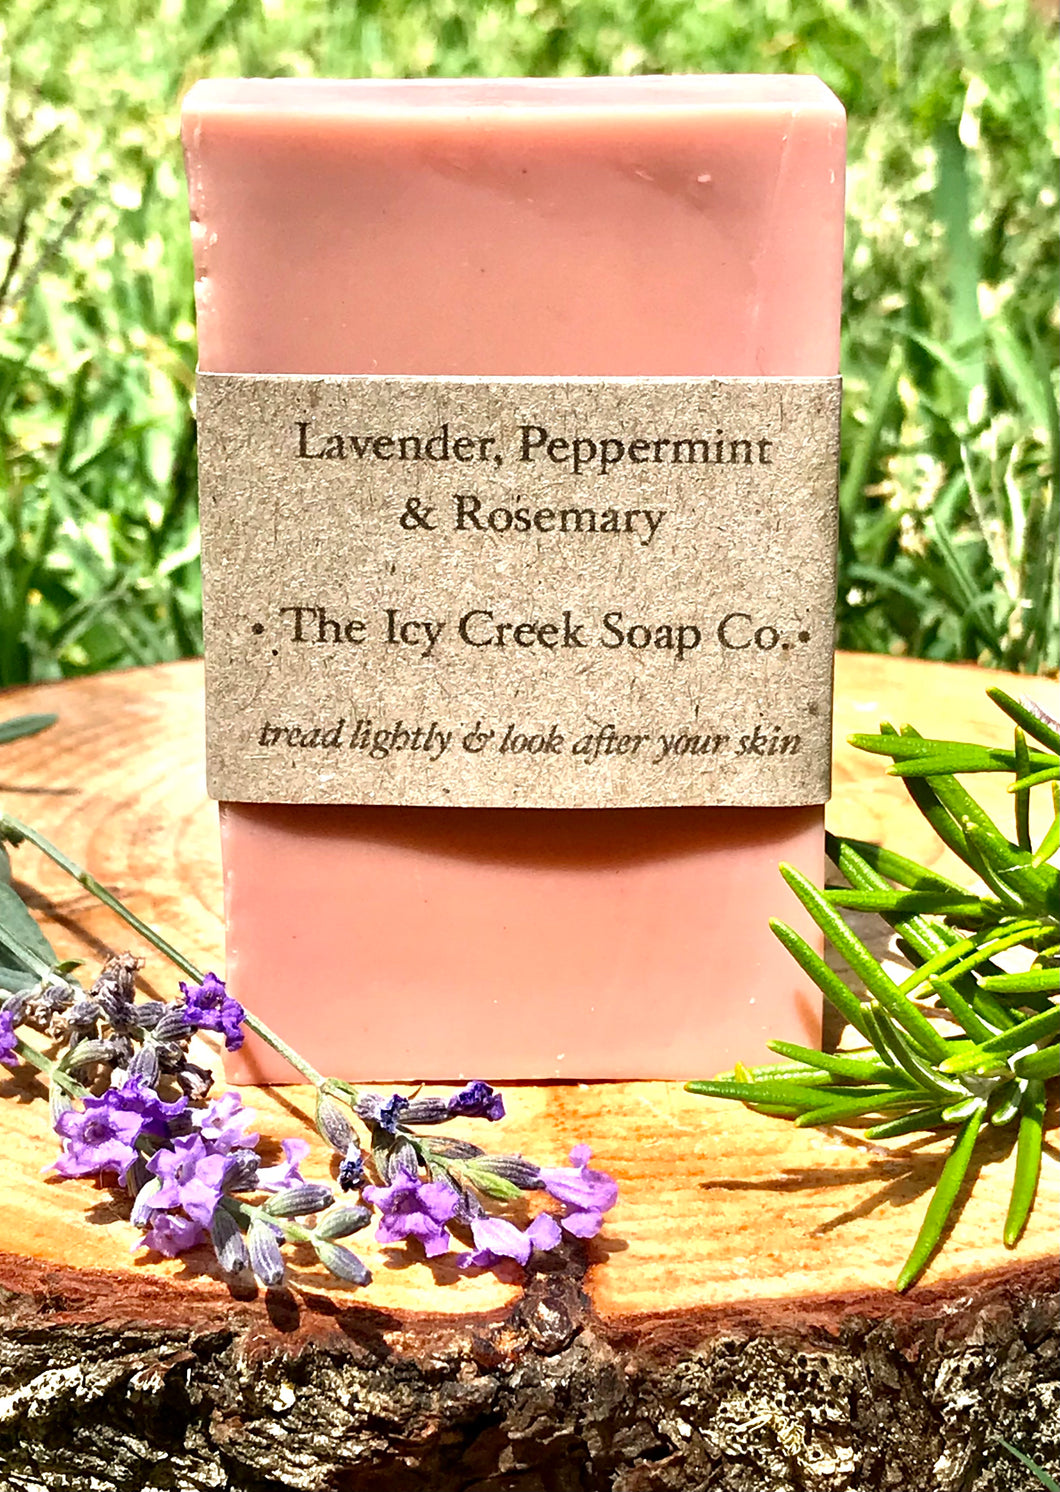 Lavender, peppermint & rosemary soap